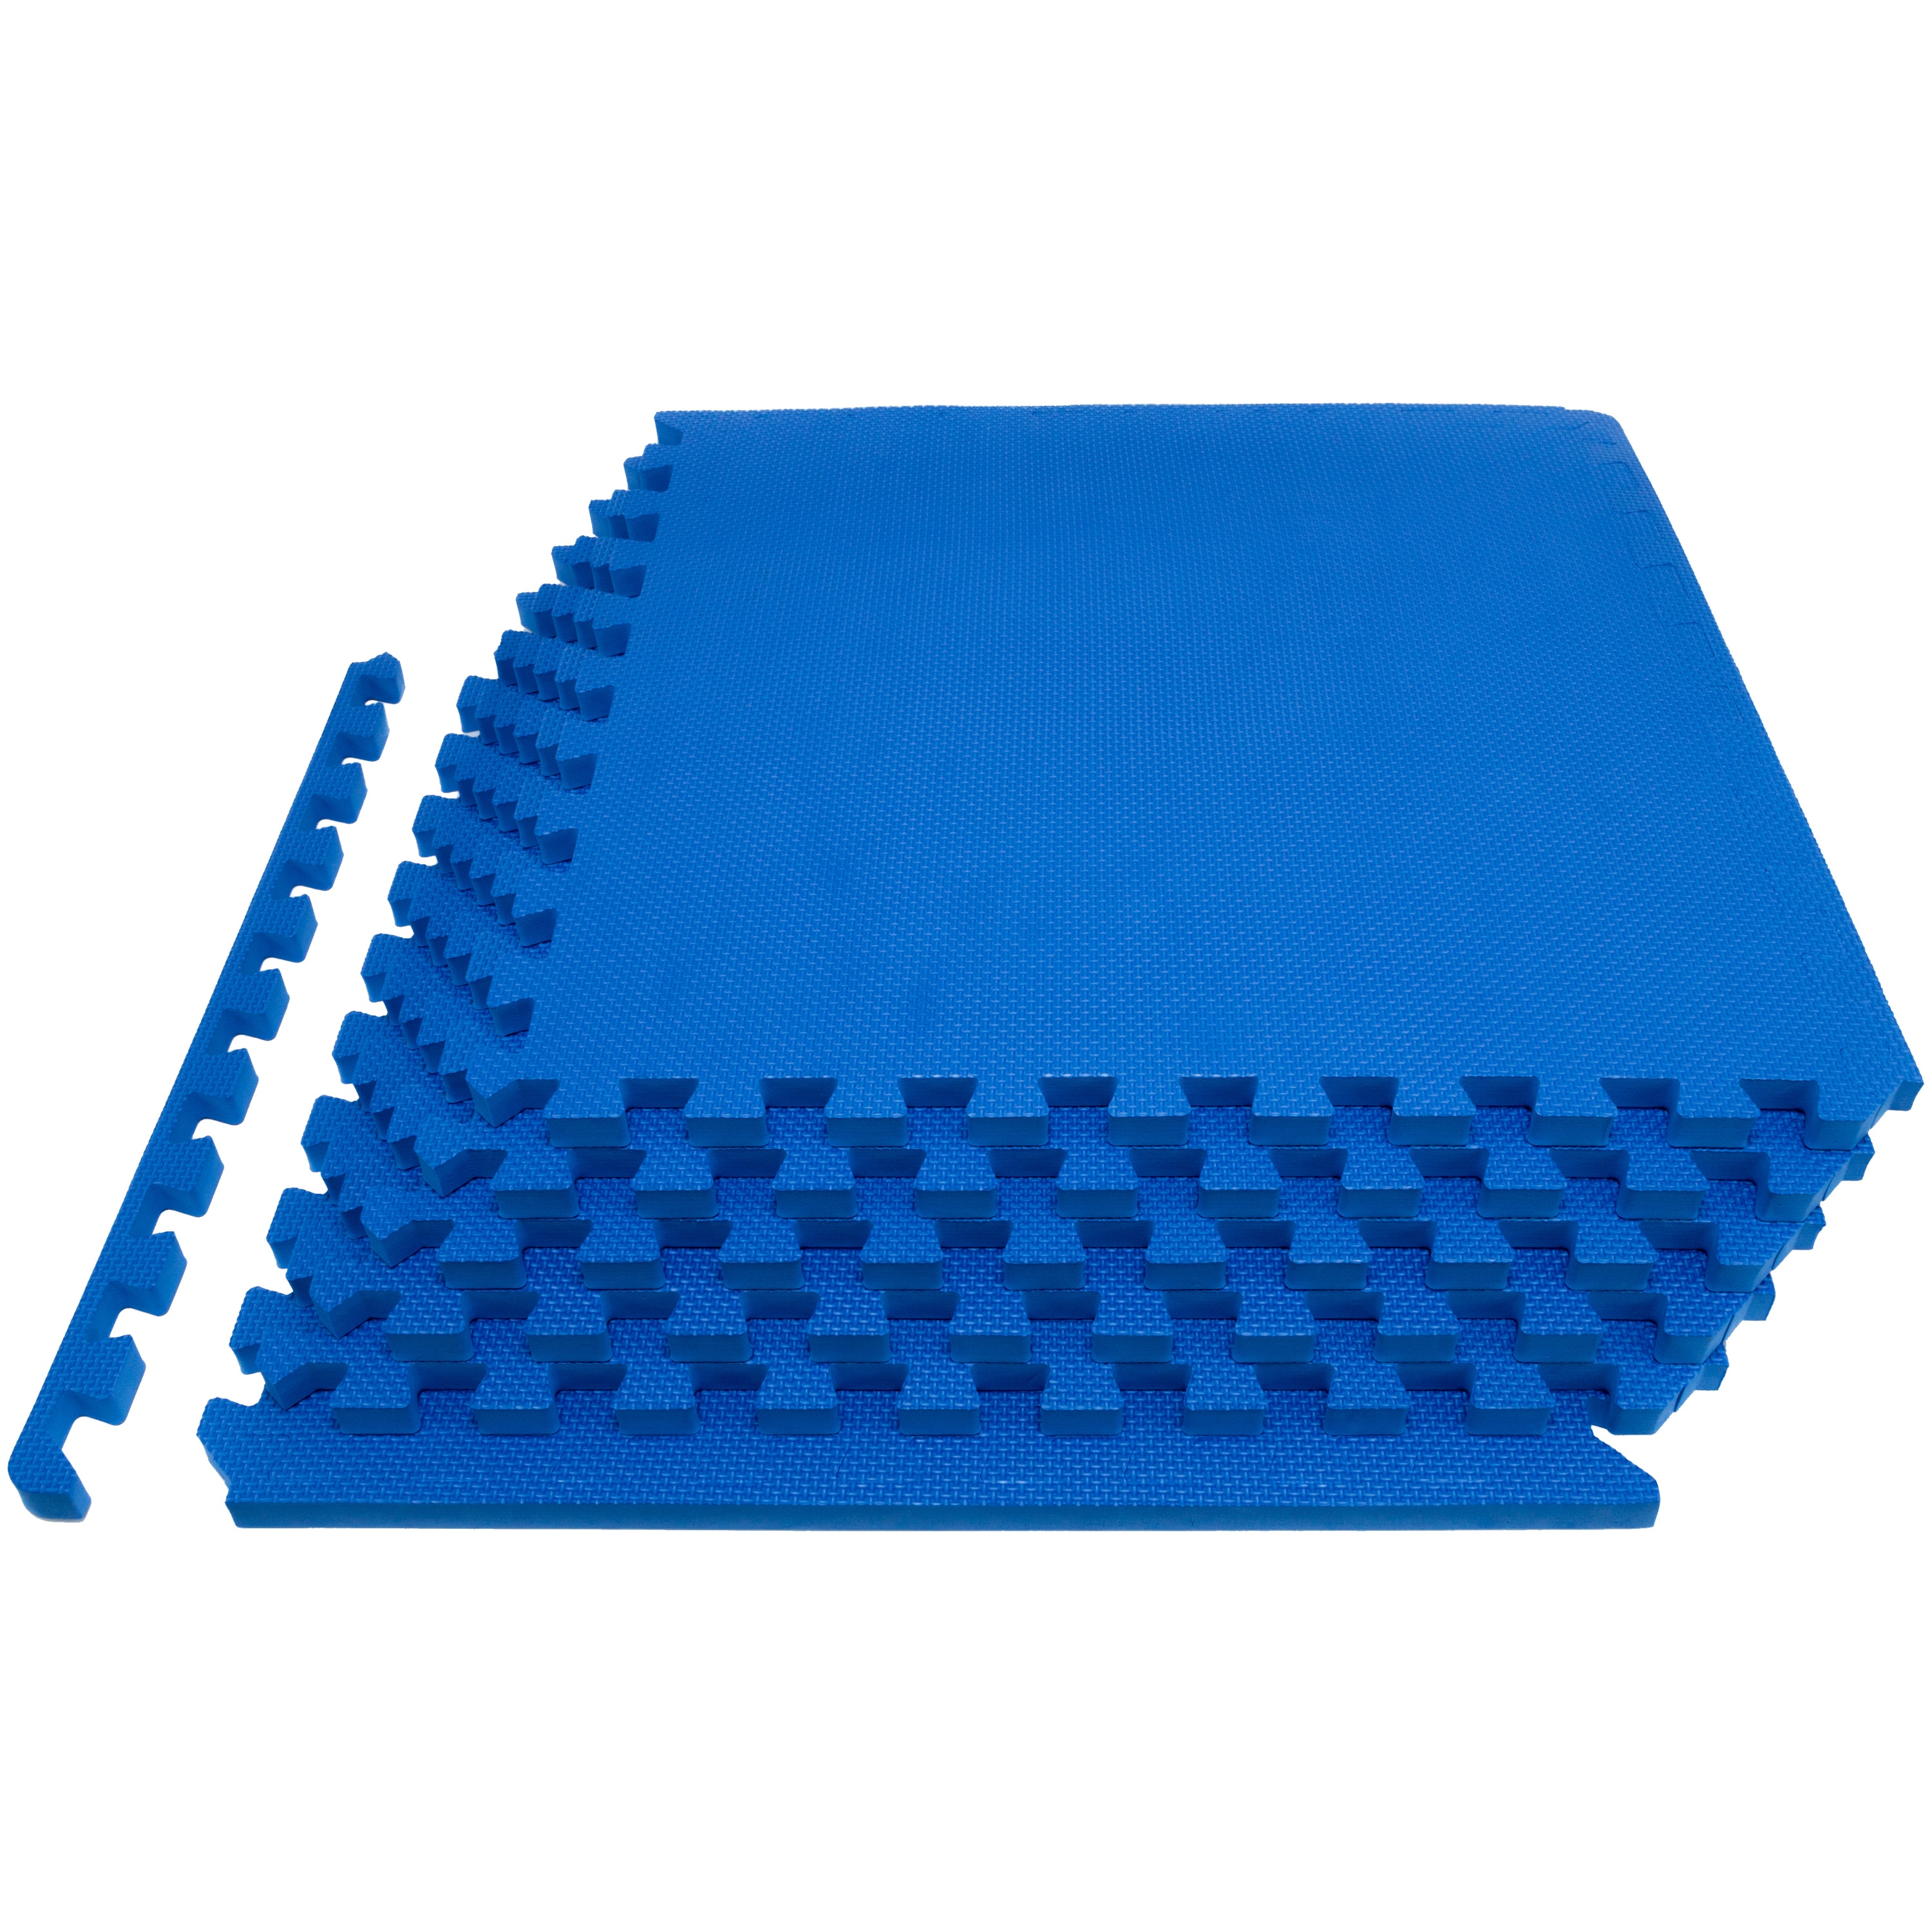 48 sq ft tan interlocking foam floor puzzle tiles mats puzzle mat flooring 